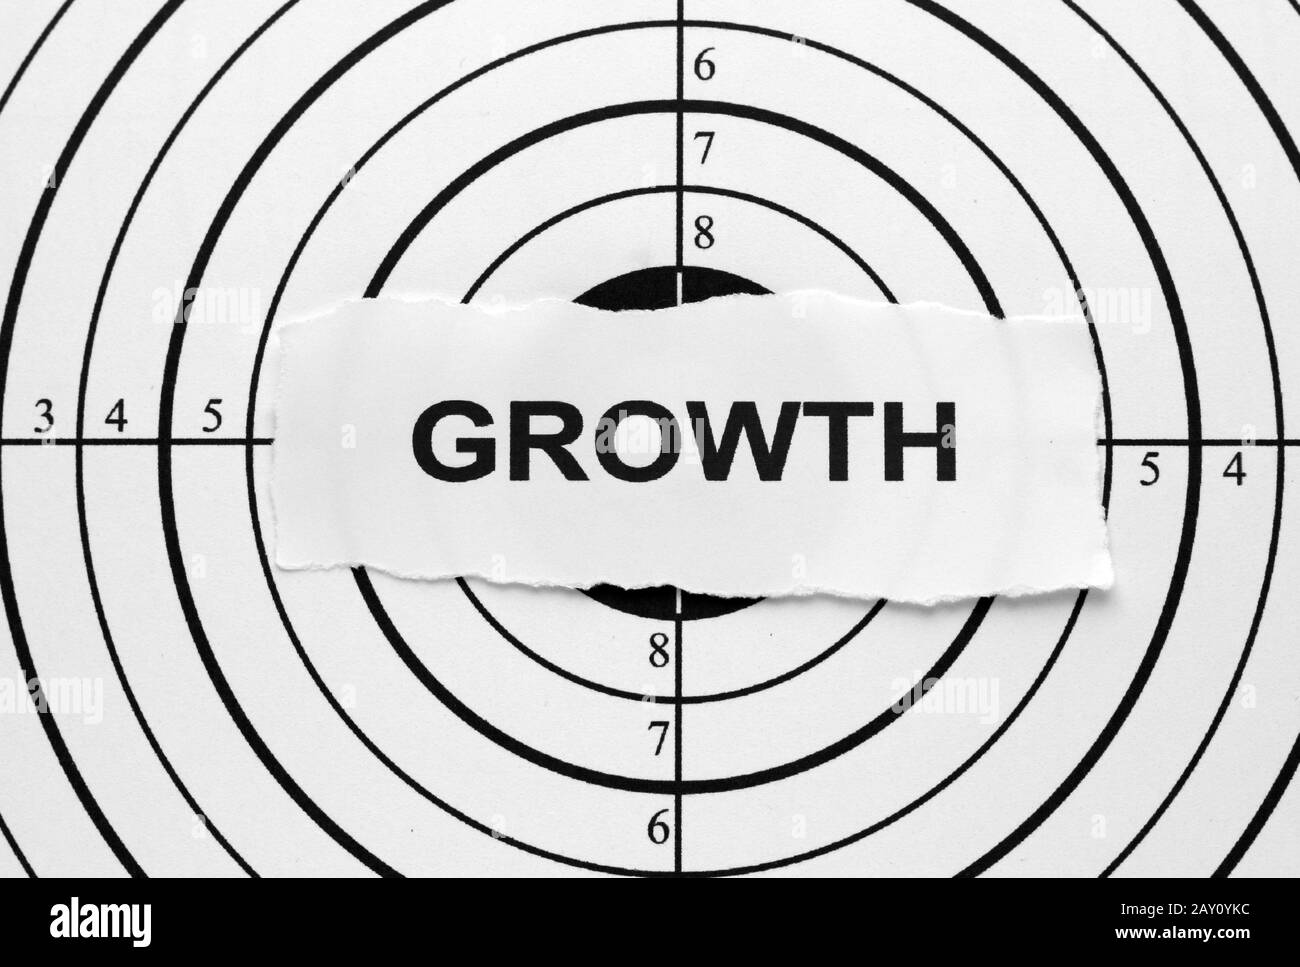 Growth target Stock Photo